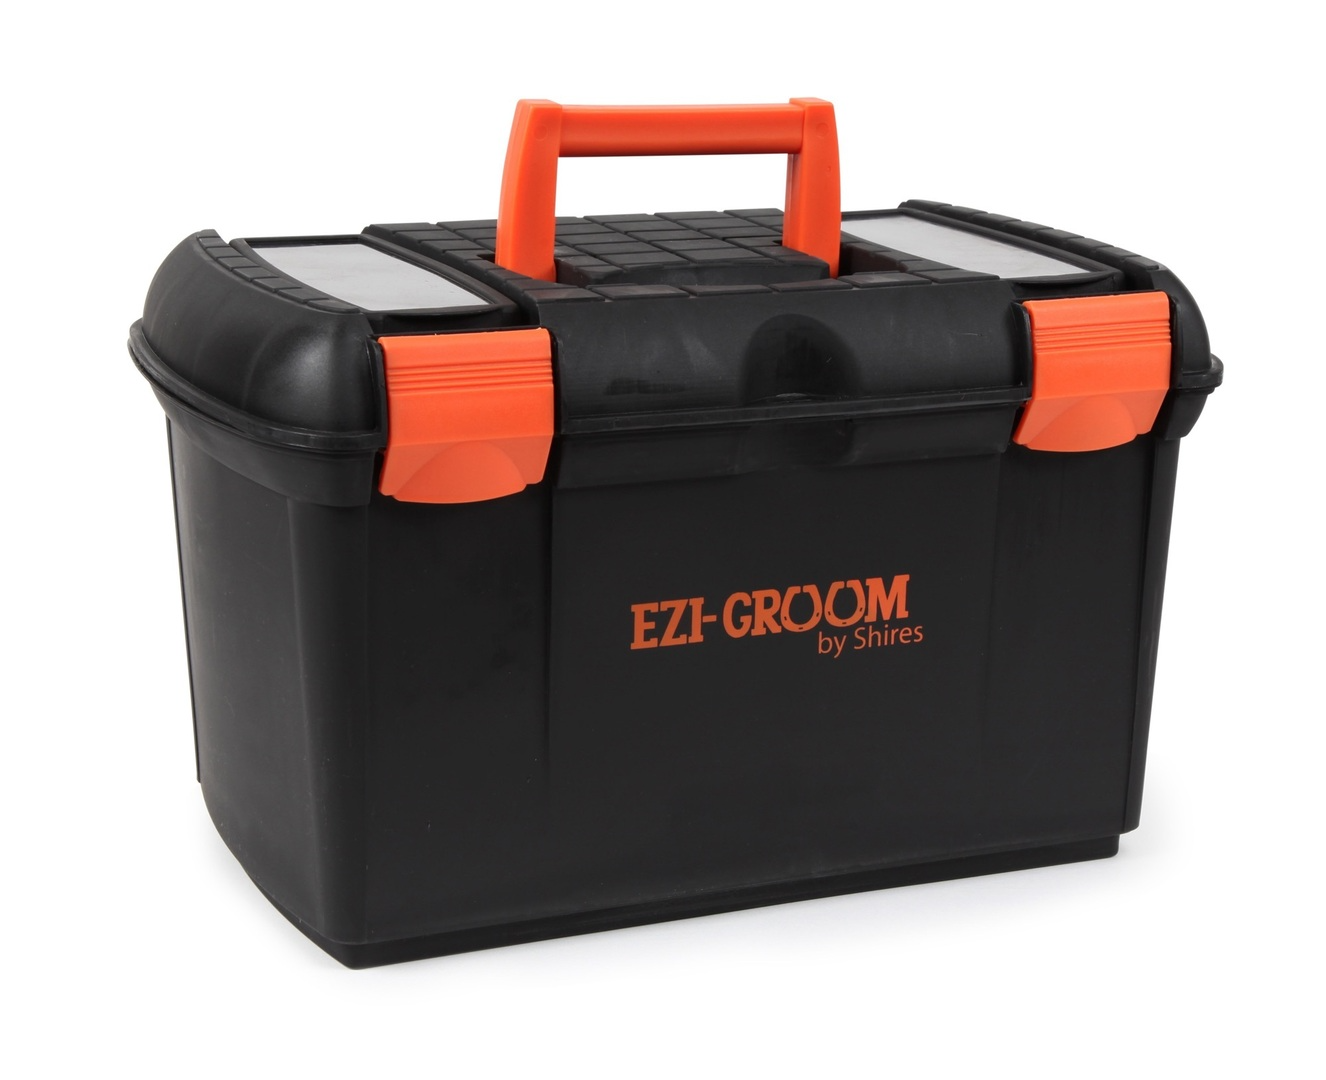 Ezi-Groom Tack Box